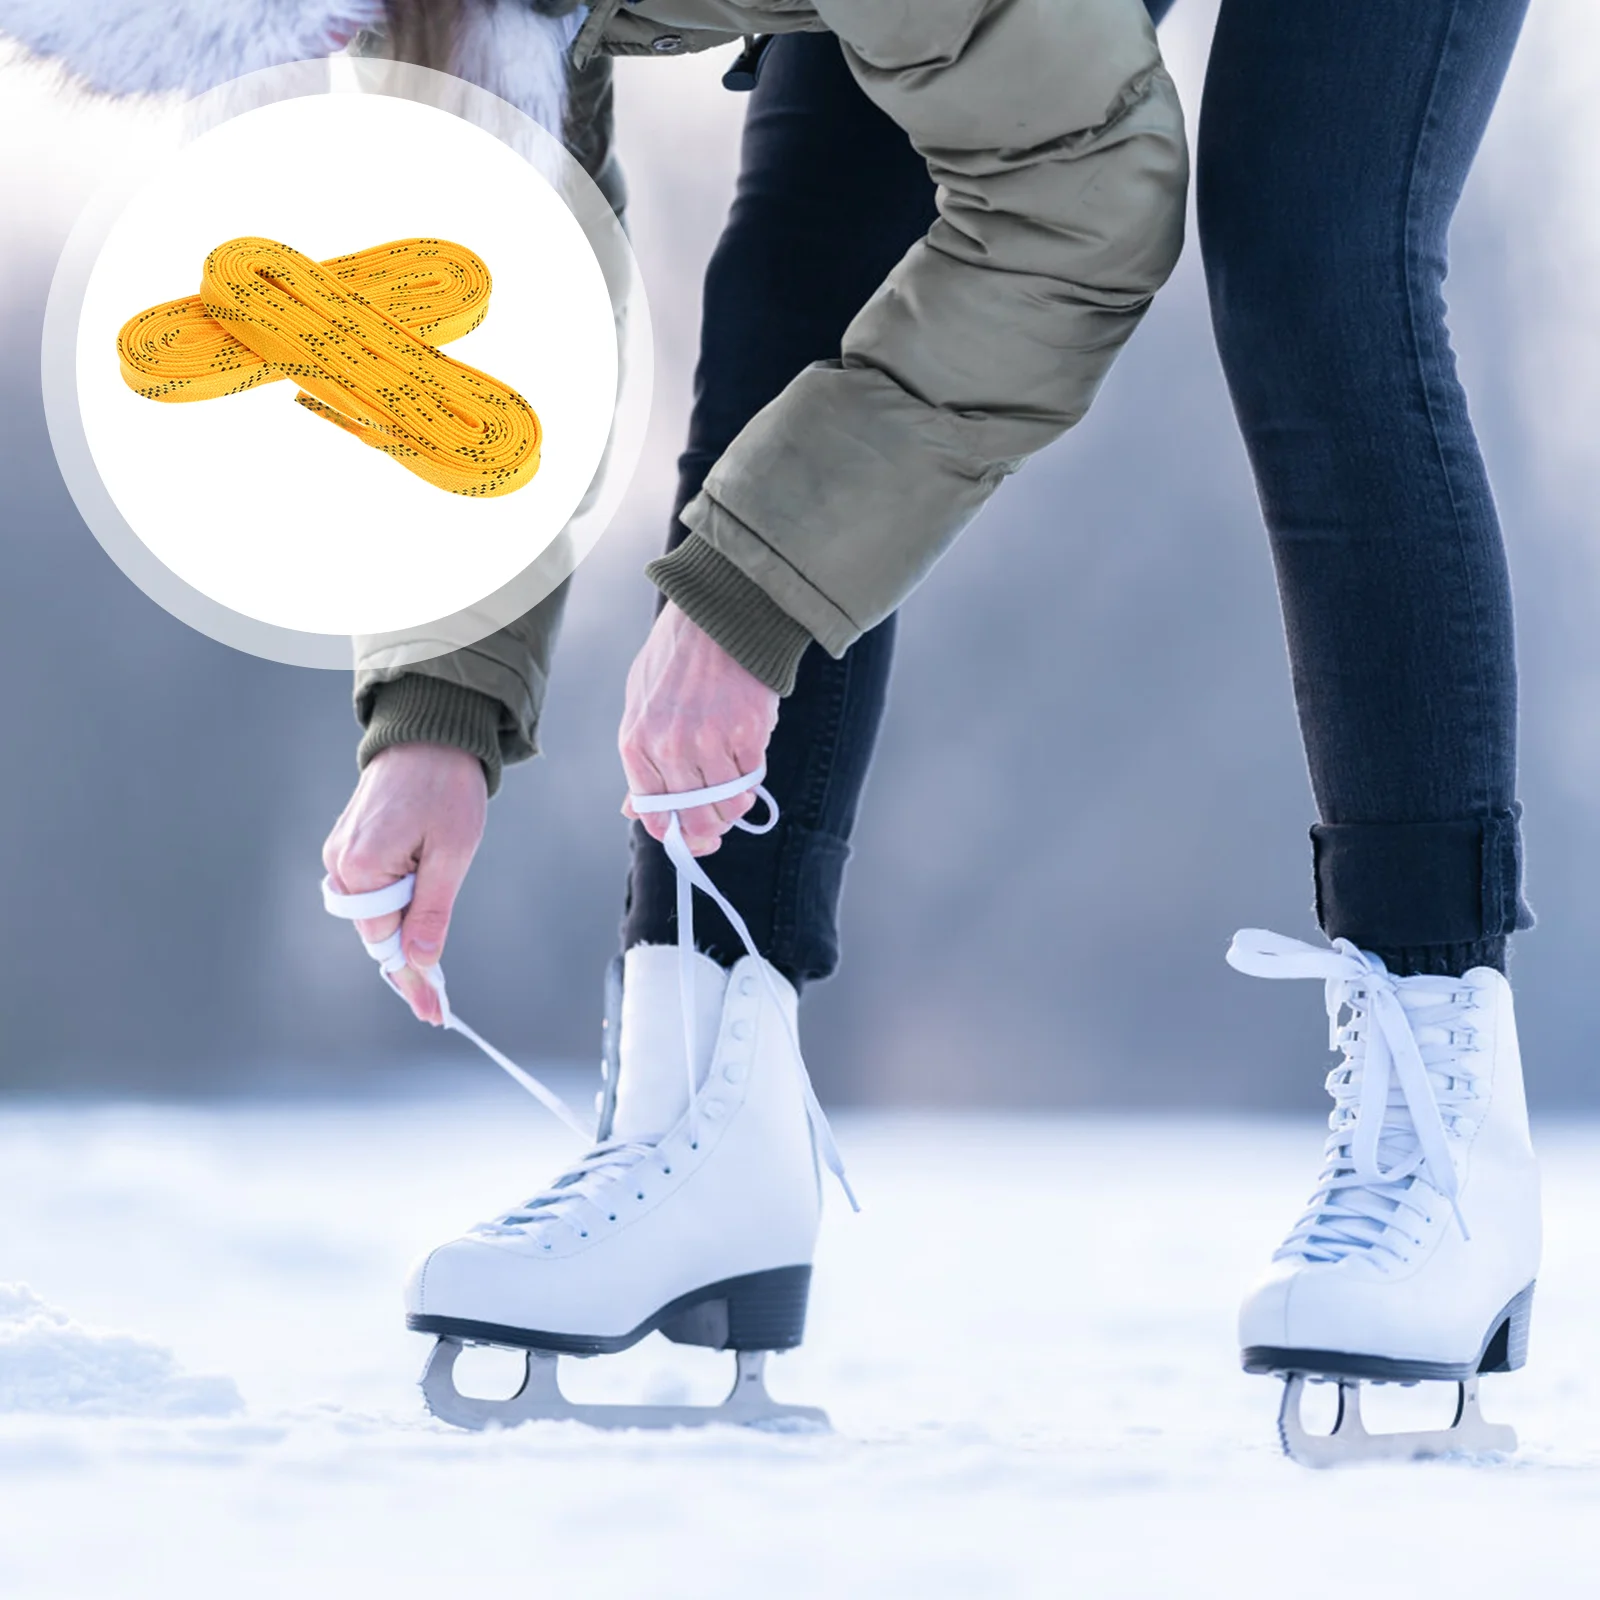 

Professional Ice Hockey Skate Laces Waxed Shoelaces Anti-Freezing Anti-Fracture Shoe Laces for Sports Skiing Hockey